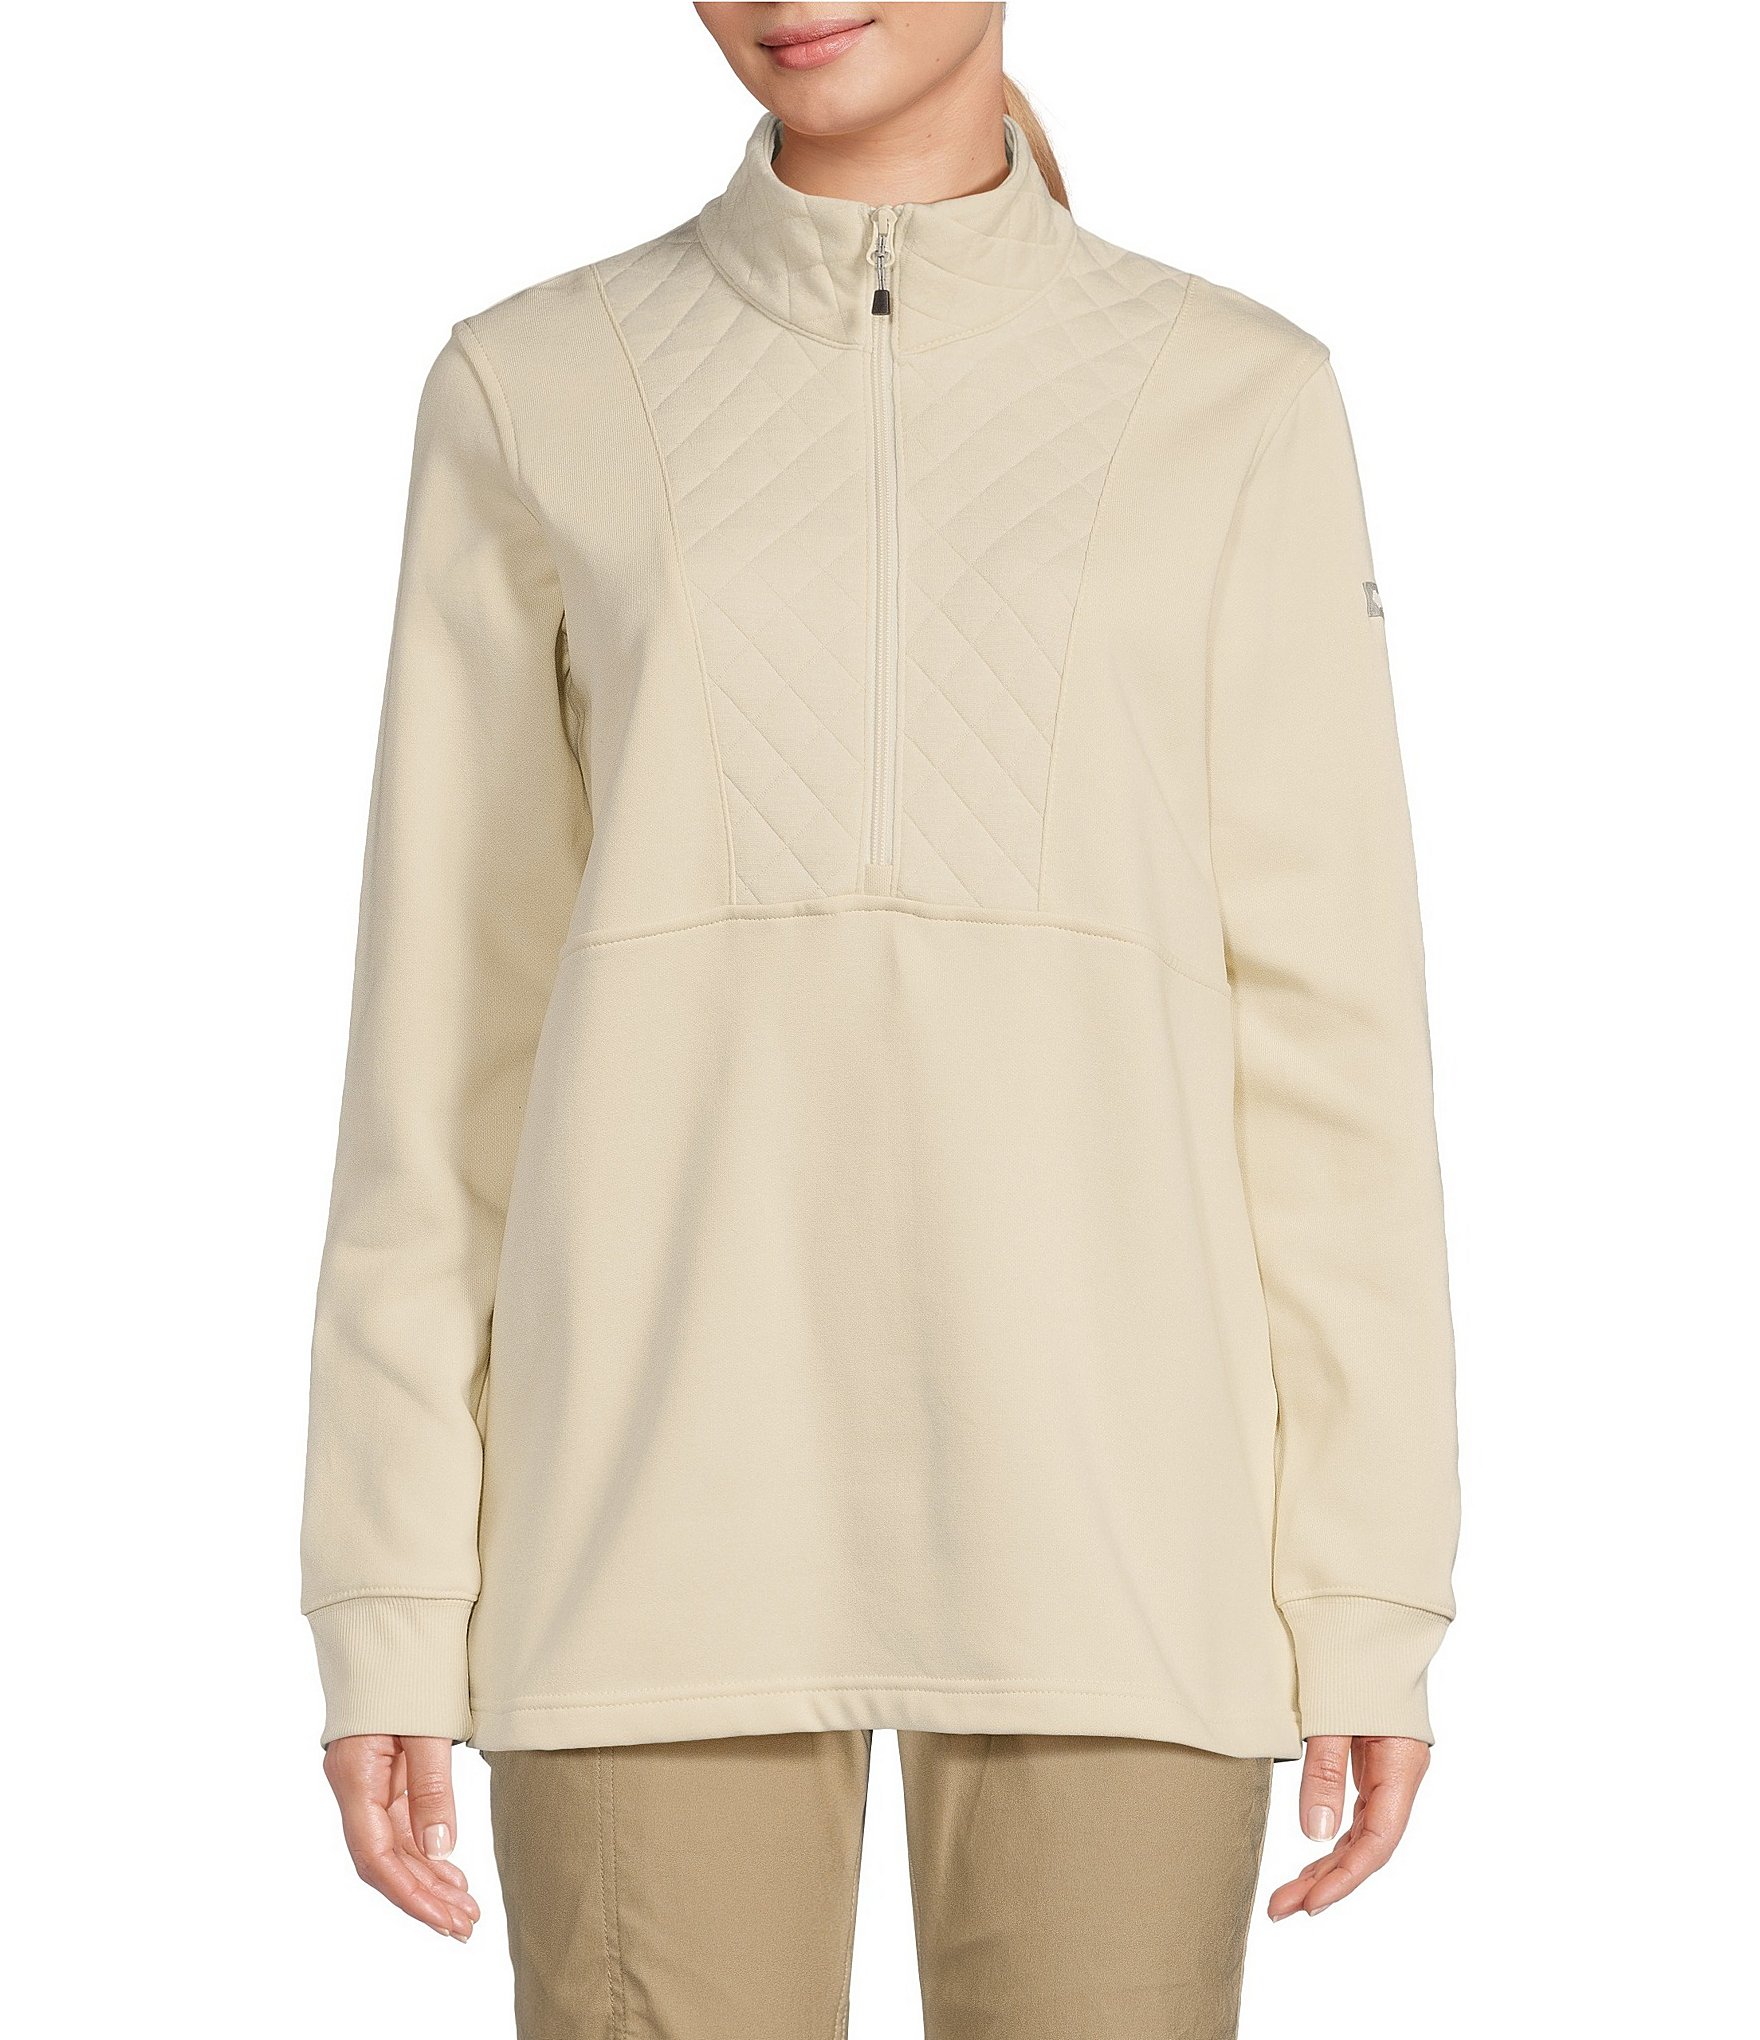 Avia Womens Long Sleeve Active Wear Side Pocket 1/4 Zip Pullover